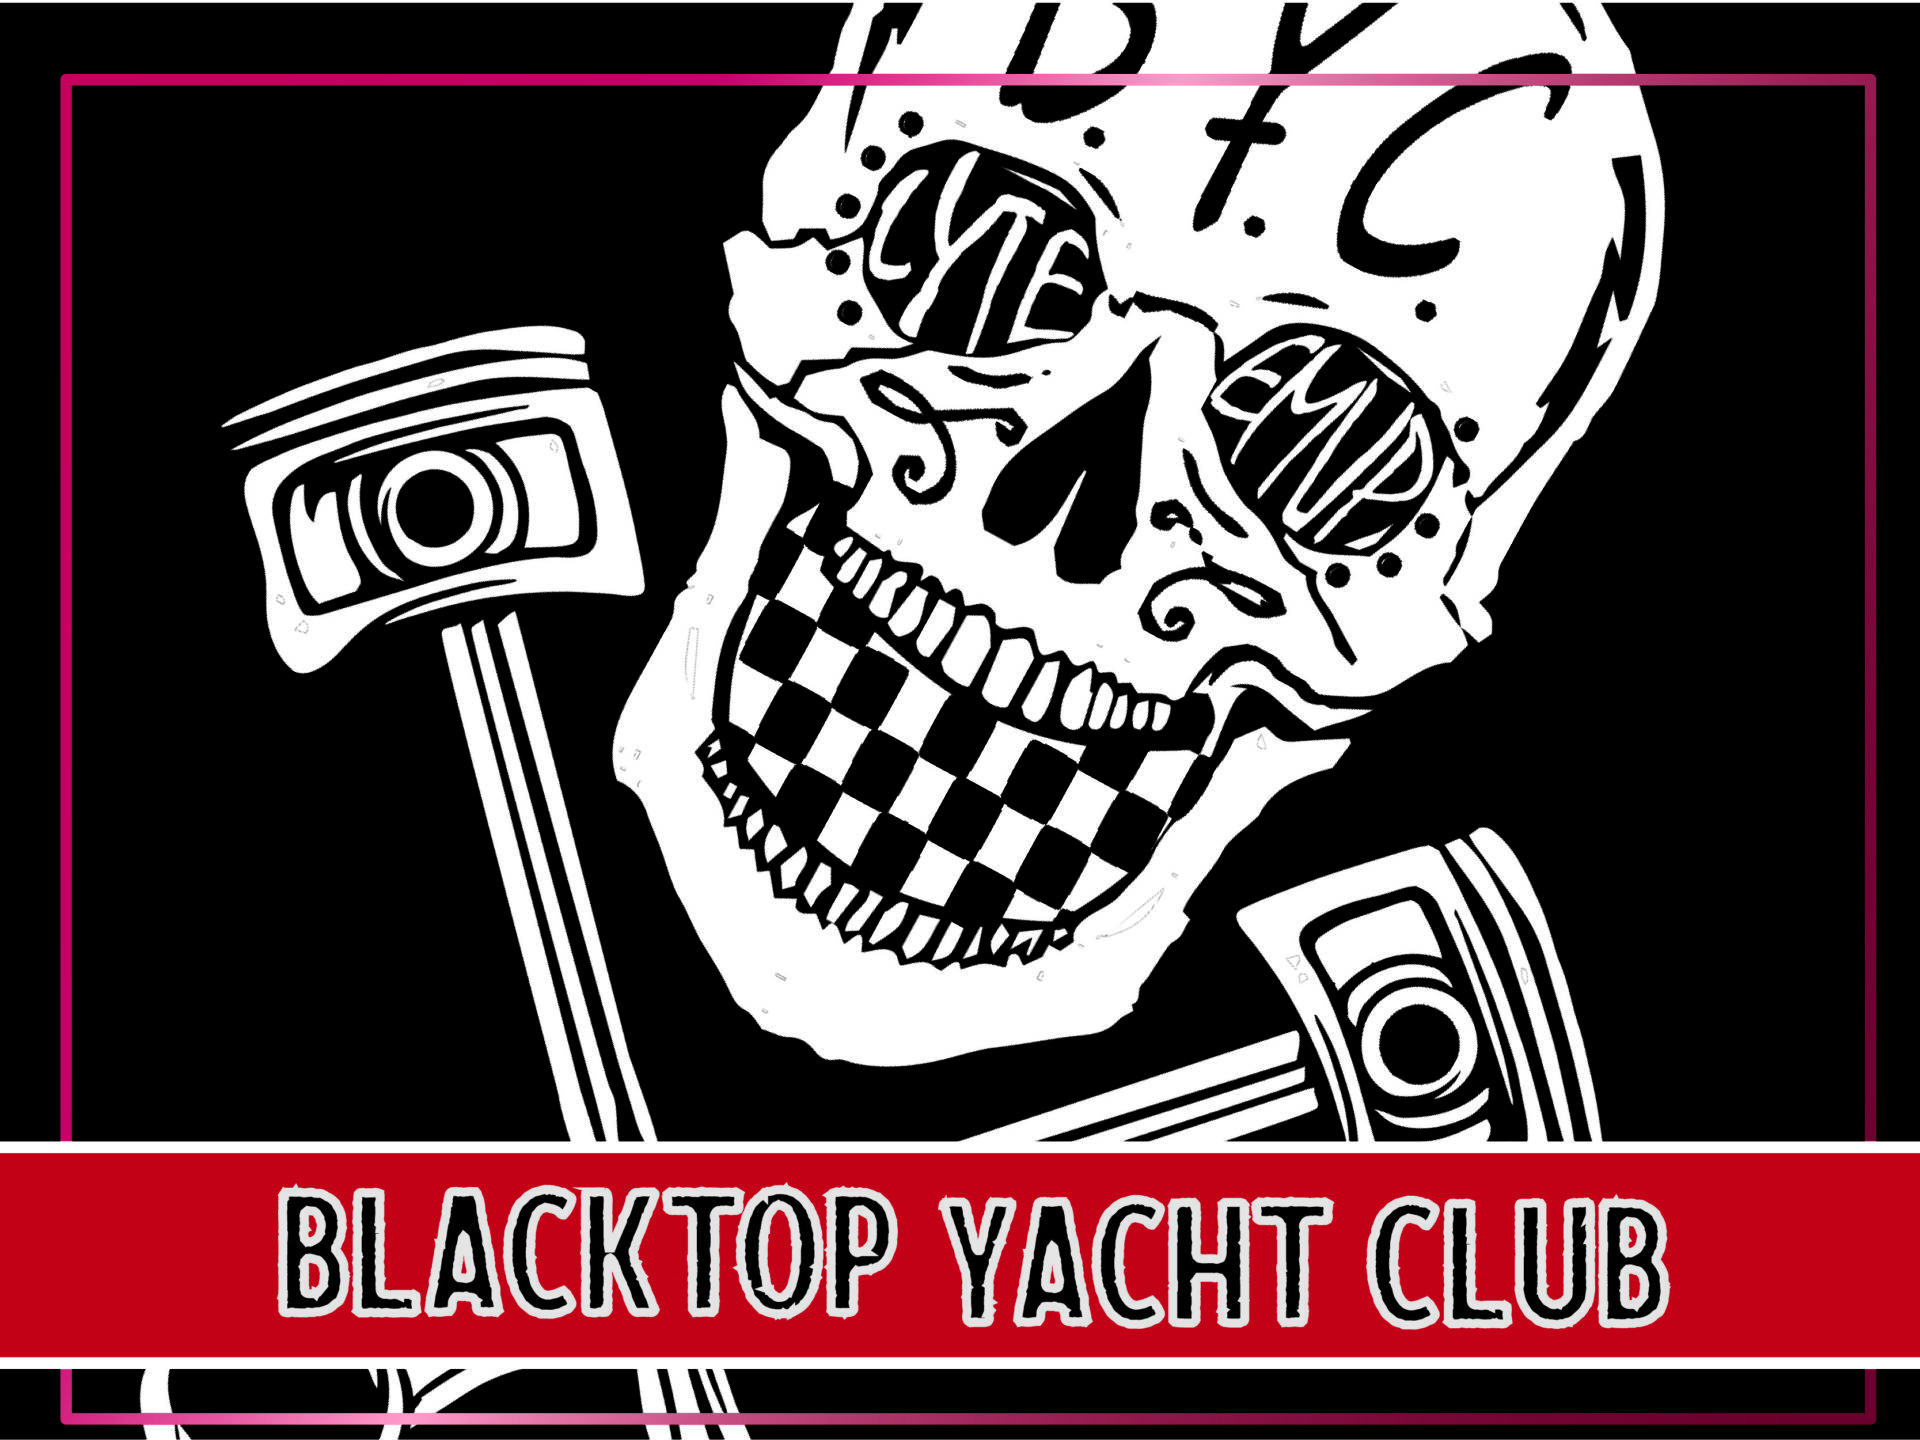 blacktop yacht club